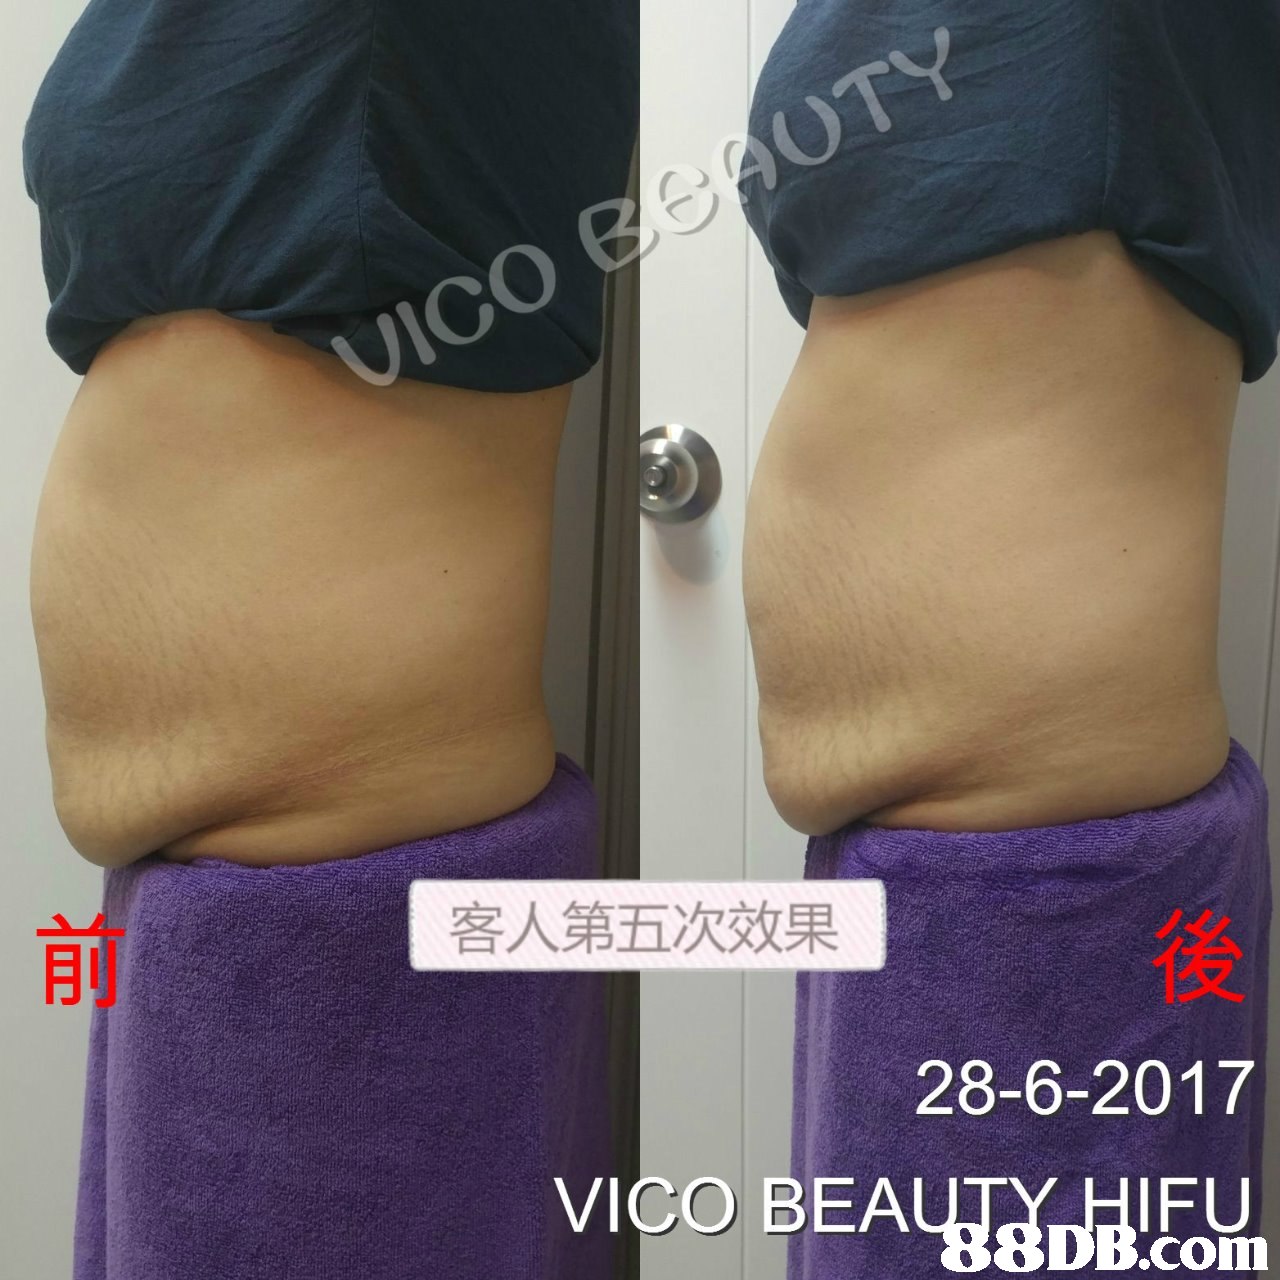 VICO AUTY 客人第五次效果 後 28-6-2017 VICO BEAUTaplEon IFU .com  abdomen,purple,joint,shoulder,active undergarment